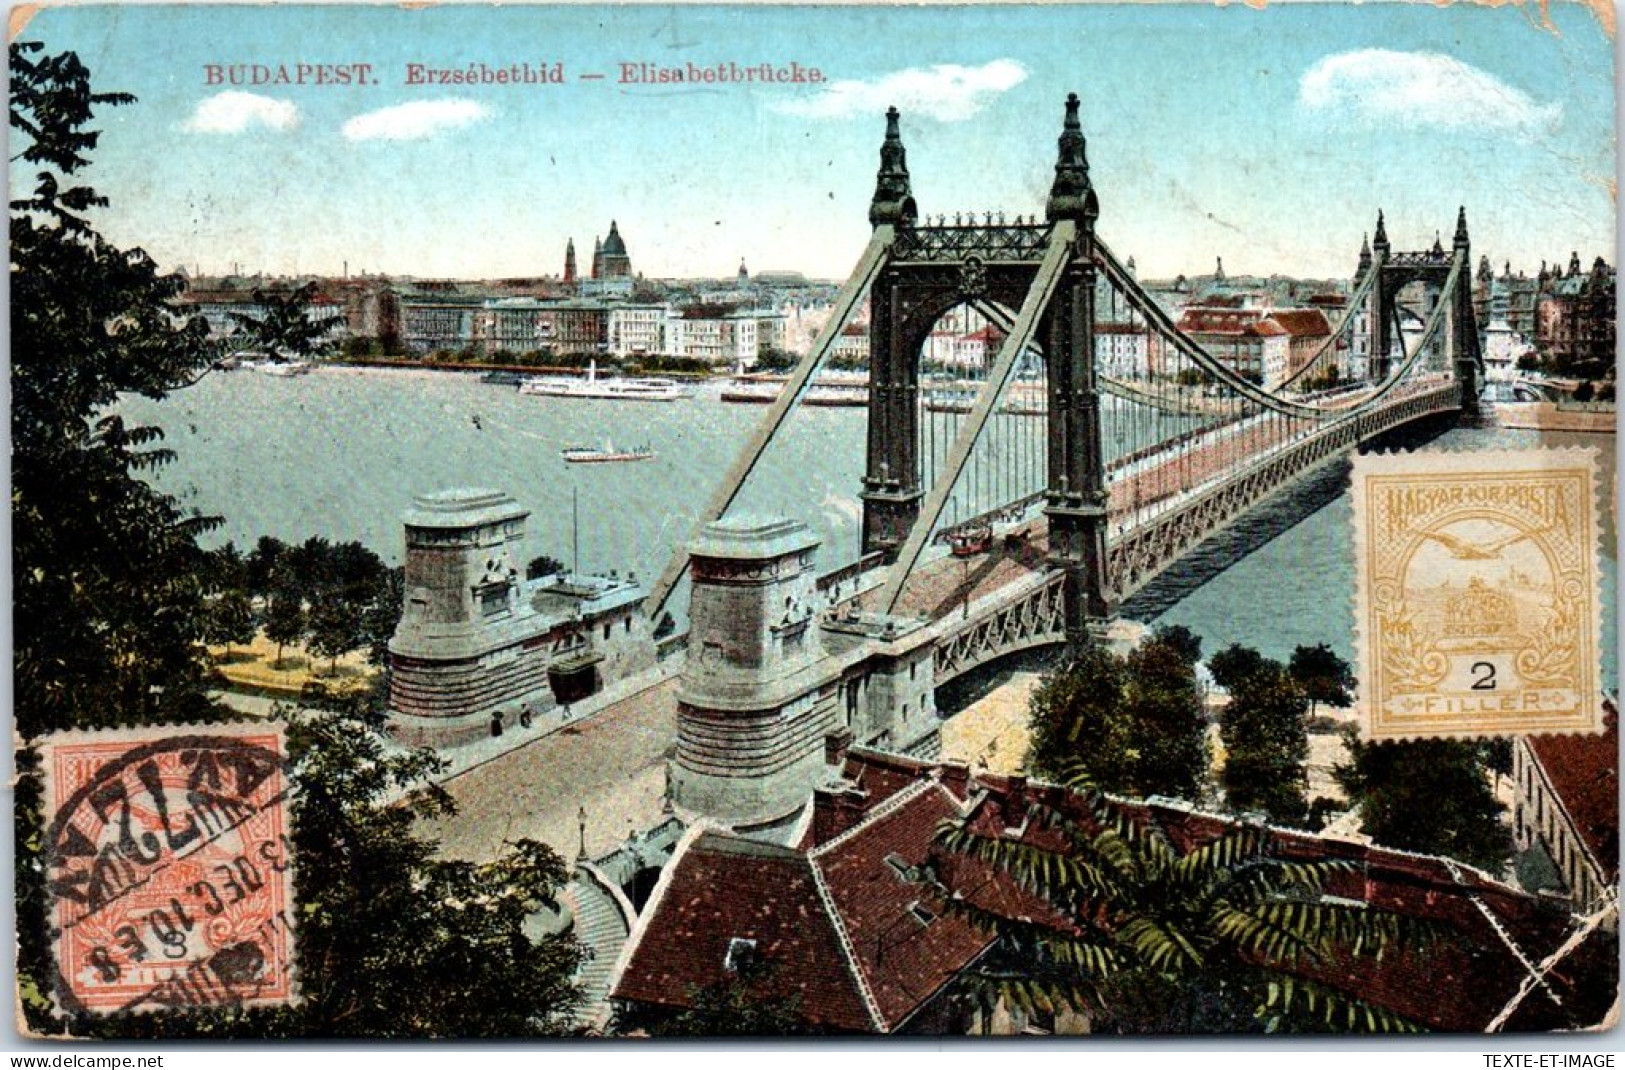 HONGRIE - Budapest Erzsebethid - Ungheria